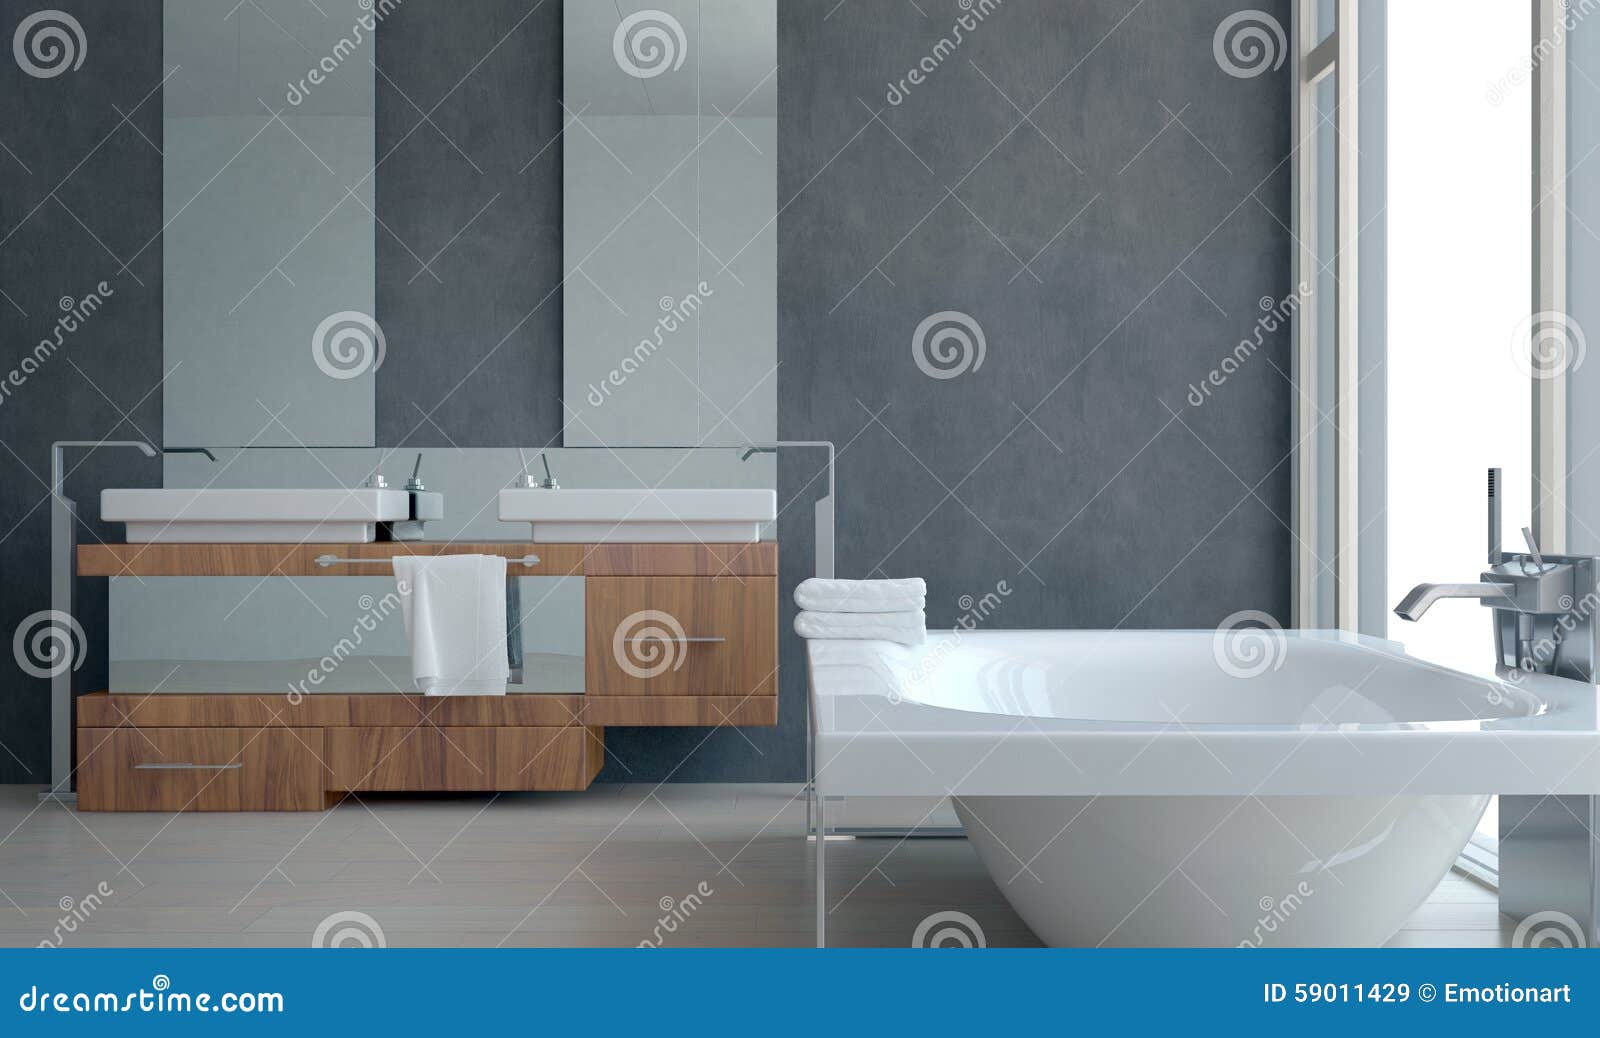 Modern Architectural Bathroom Interior Design Stock Image - Image of ...